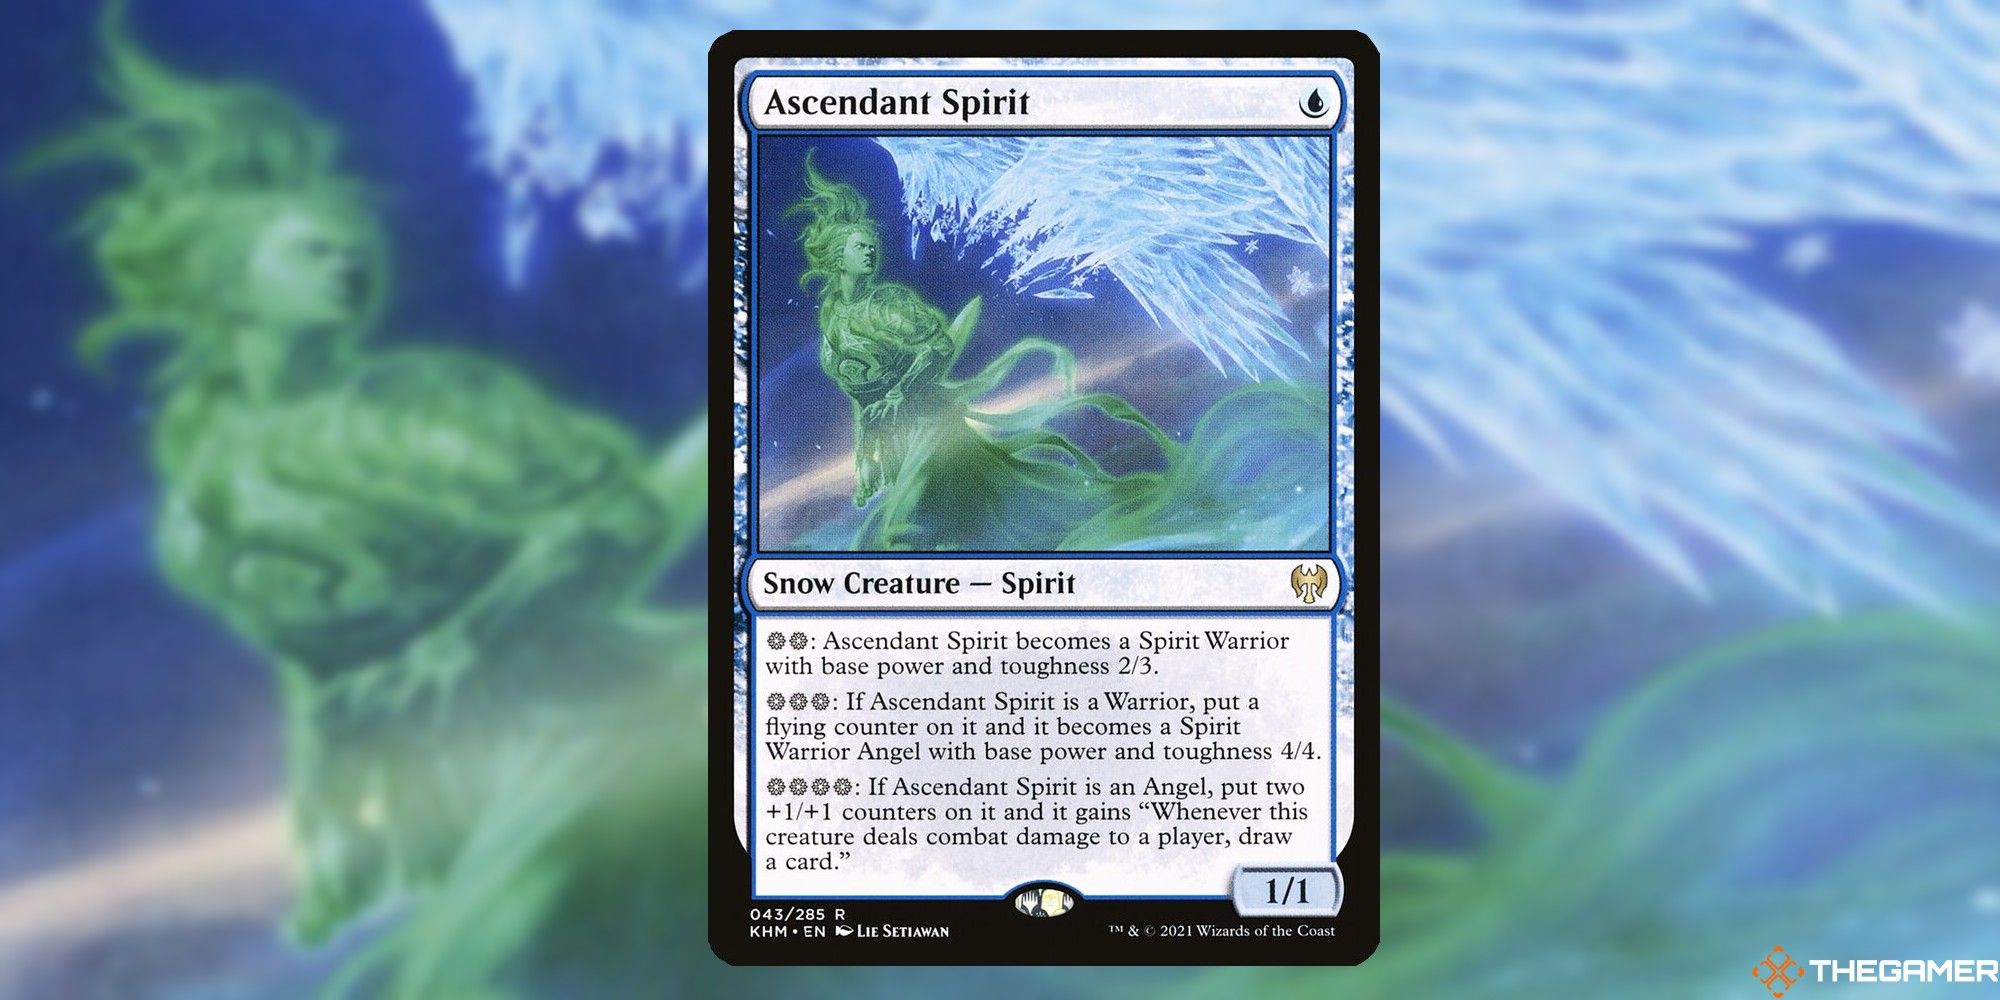 Ascendant Spirit card and art background